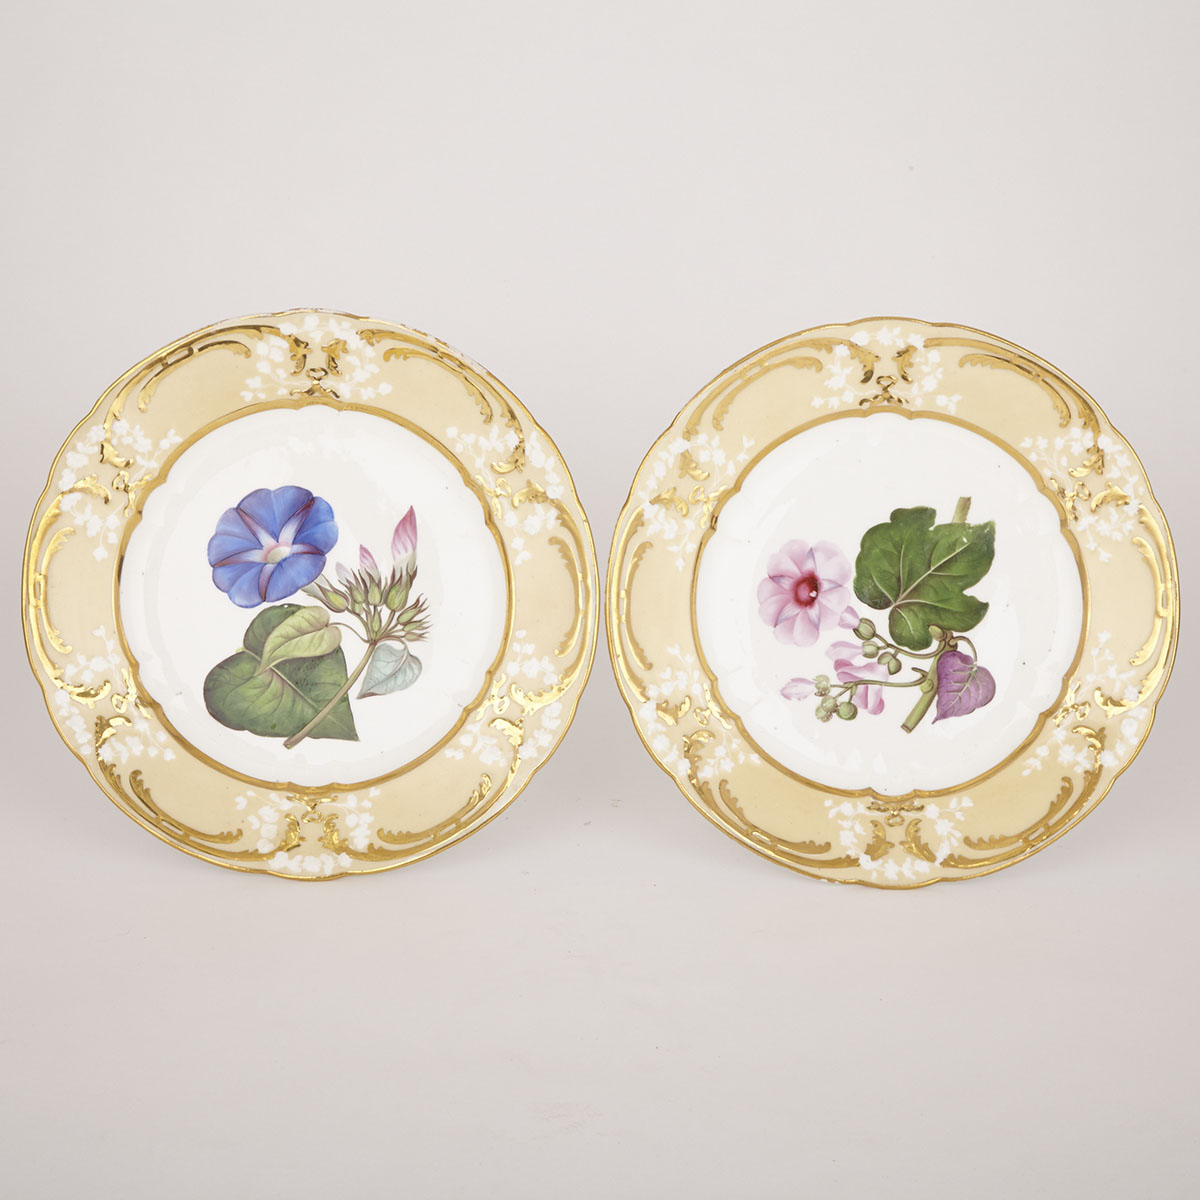 Pair of English Porcelain Botanical Plates, c.1825-30